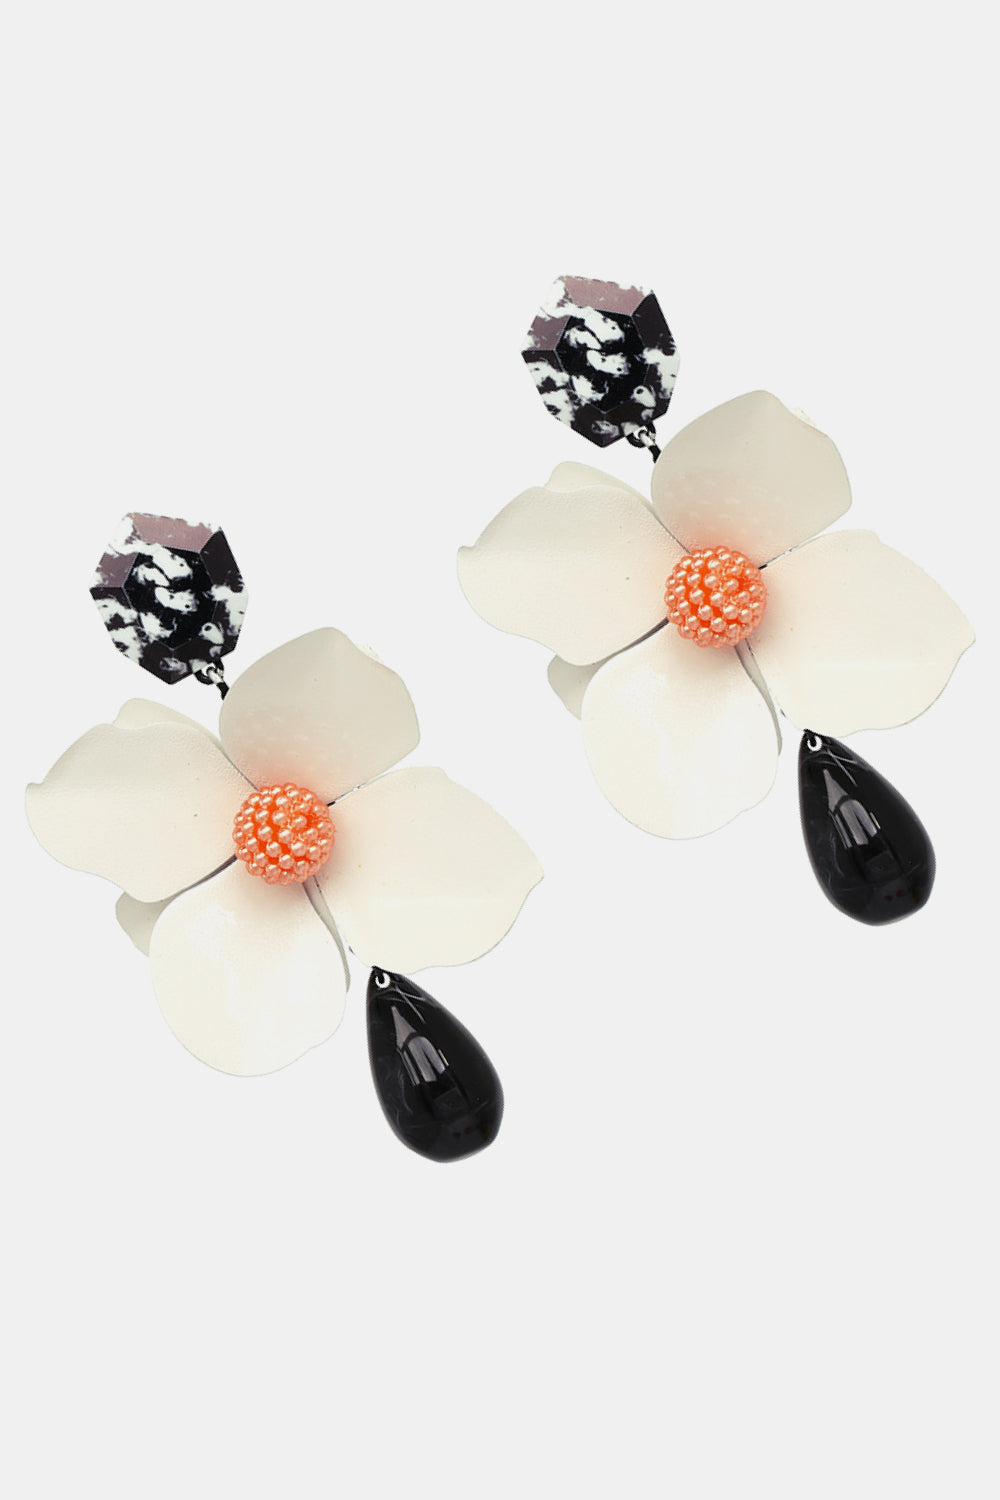 Bloosm Flower and Teardrop Resin Dangle Earrings - AllIn Computer